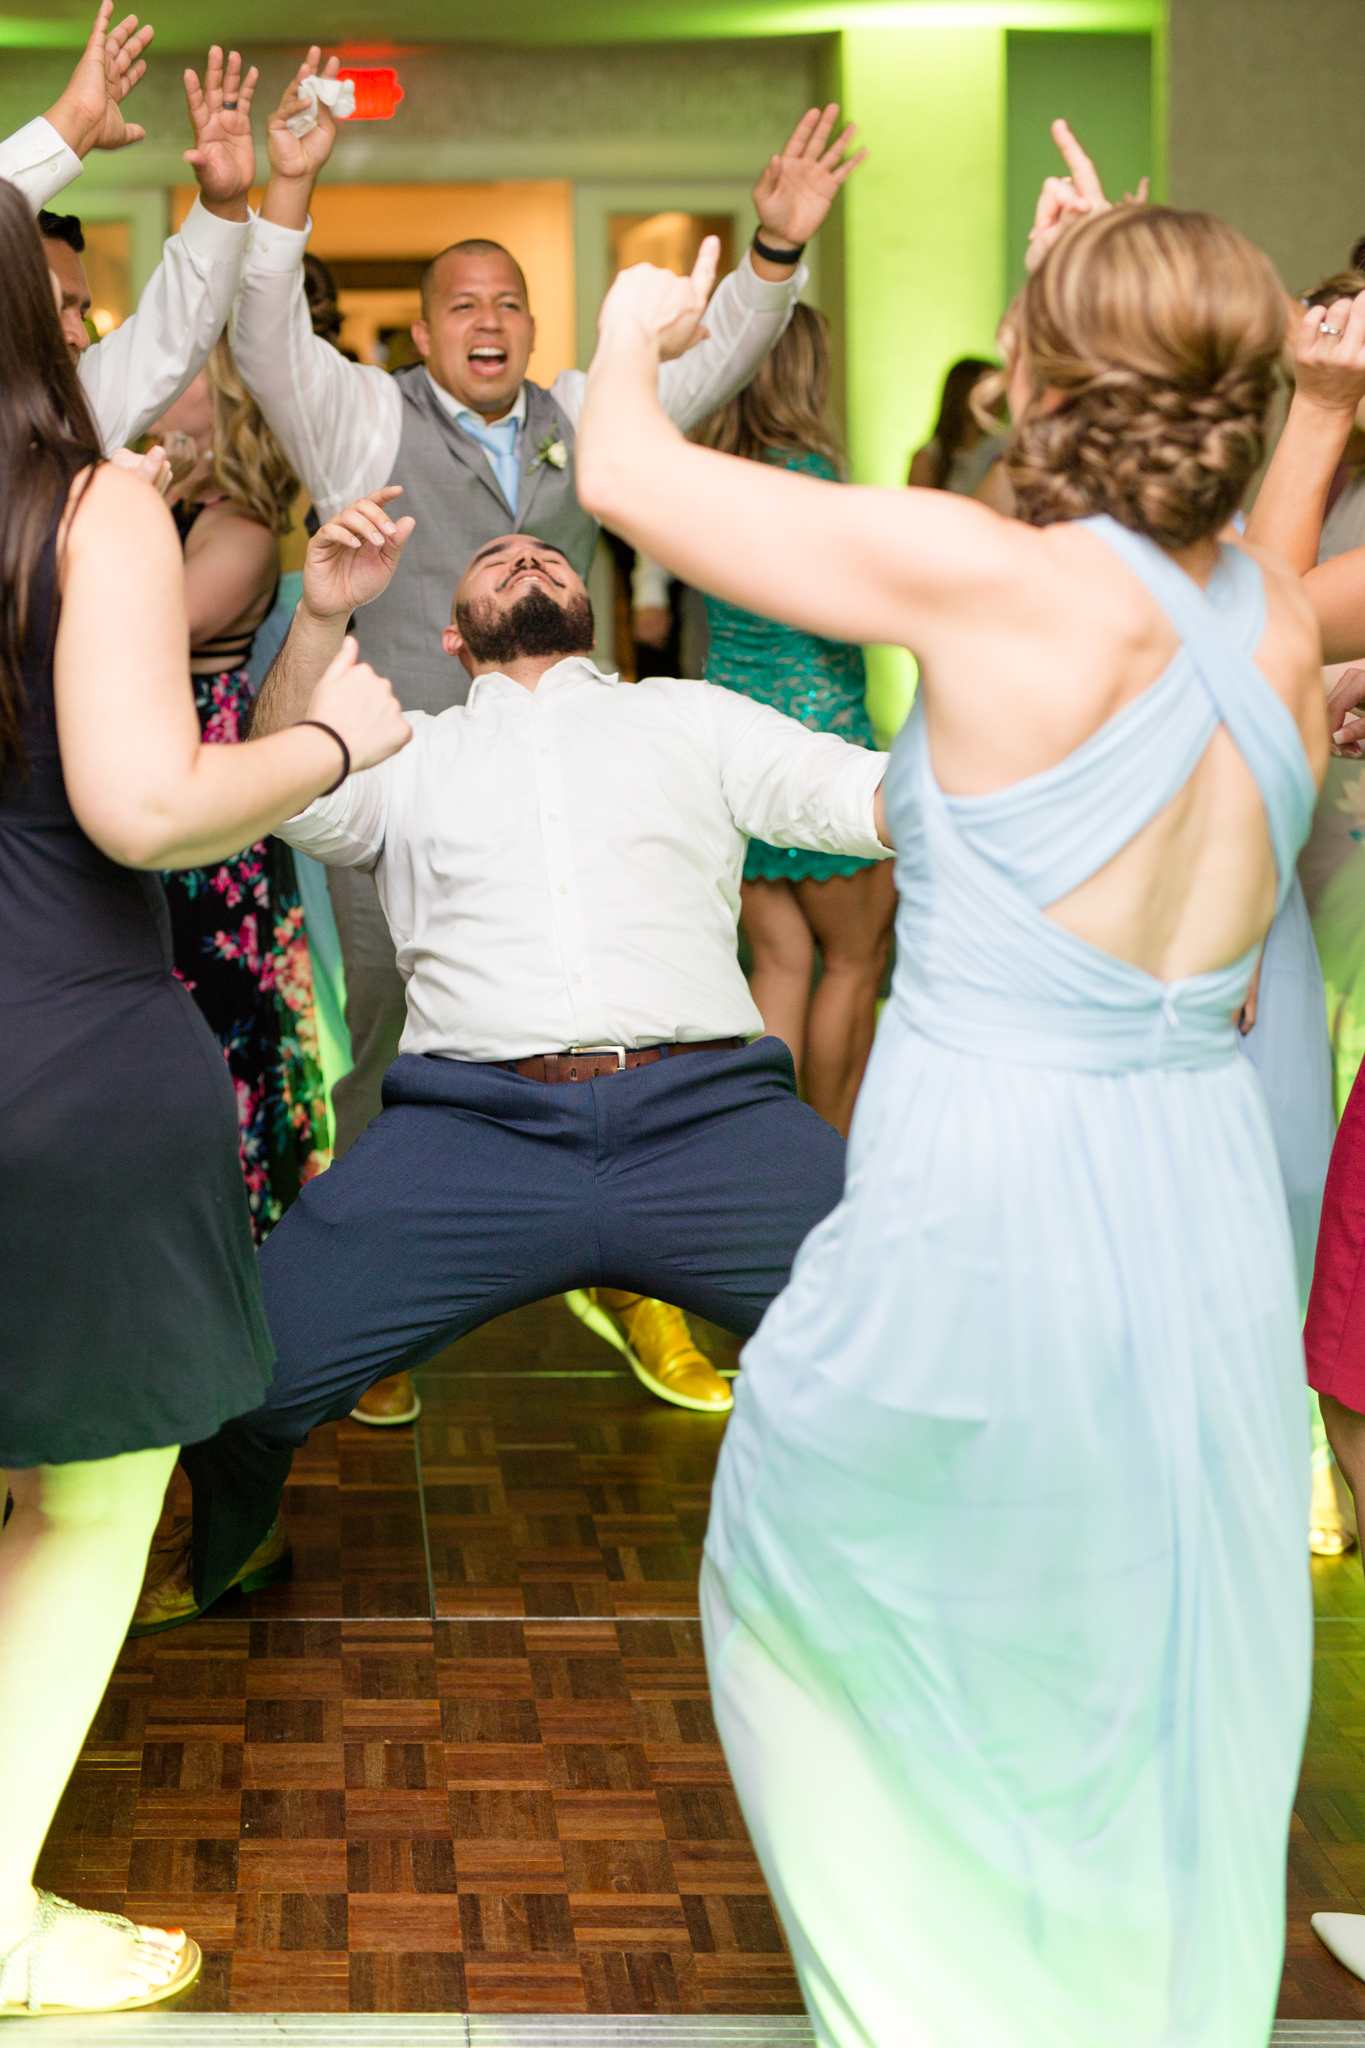 Wedding guests dance at wedding reception.